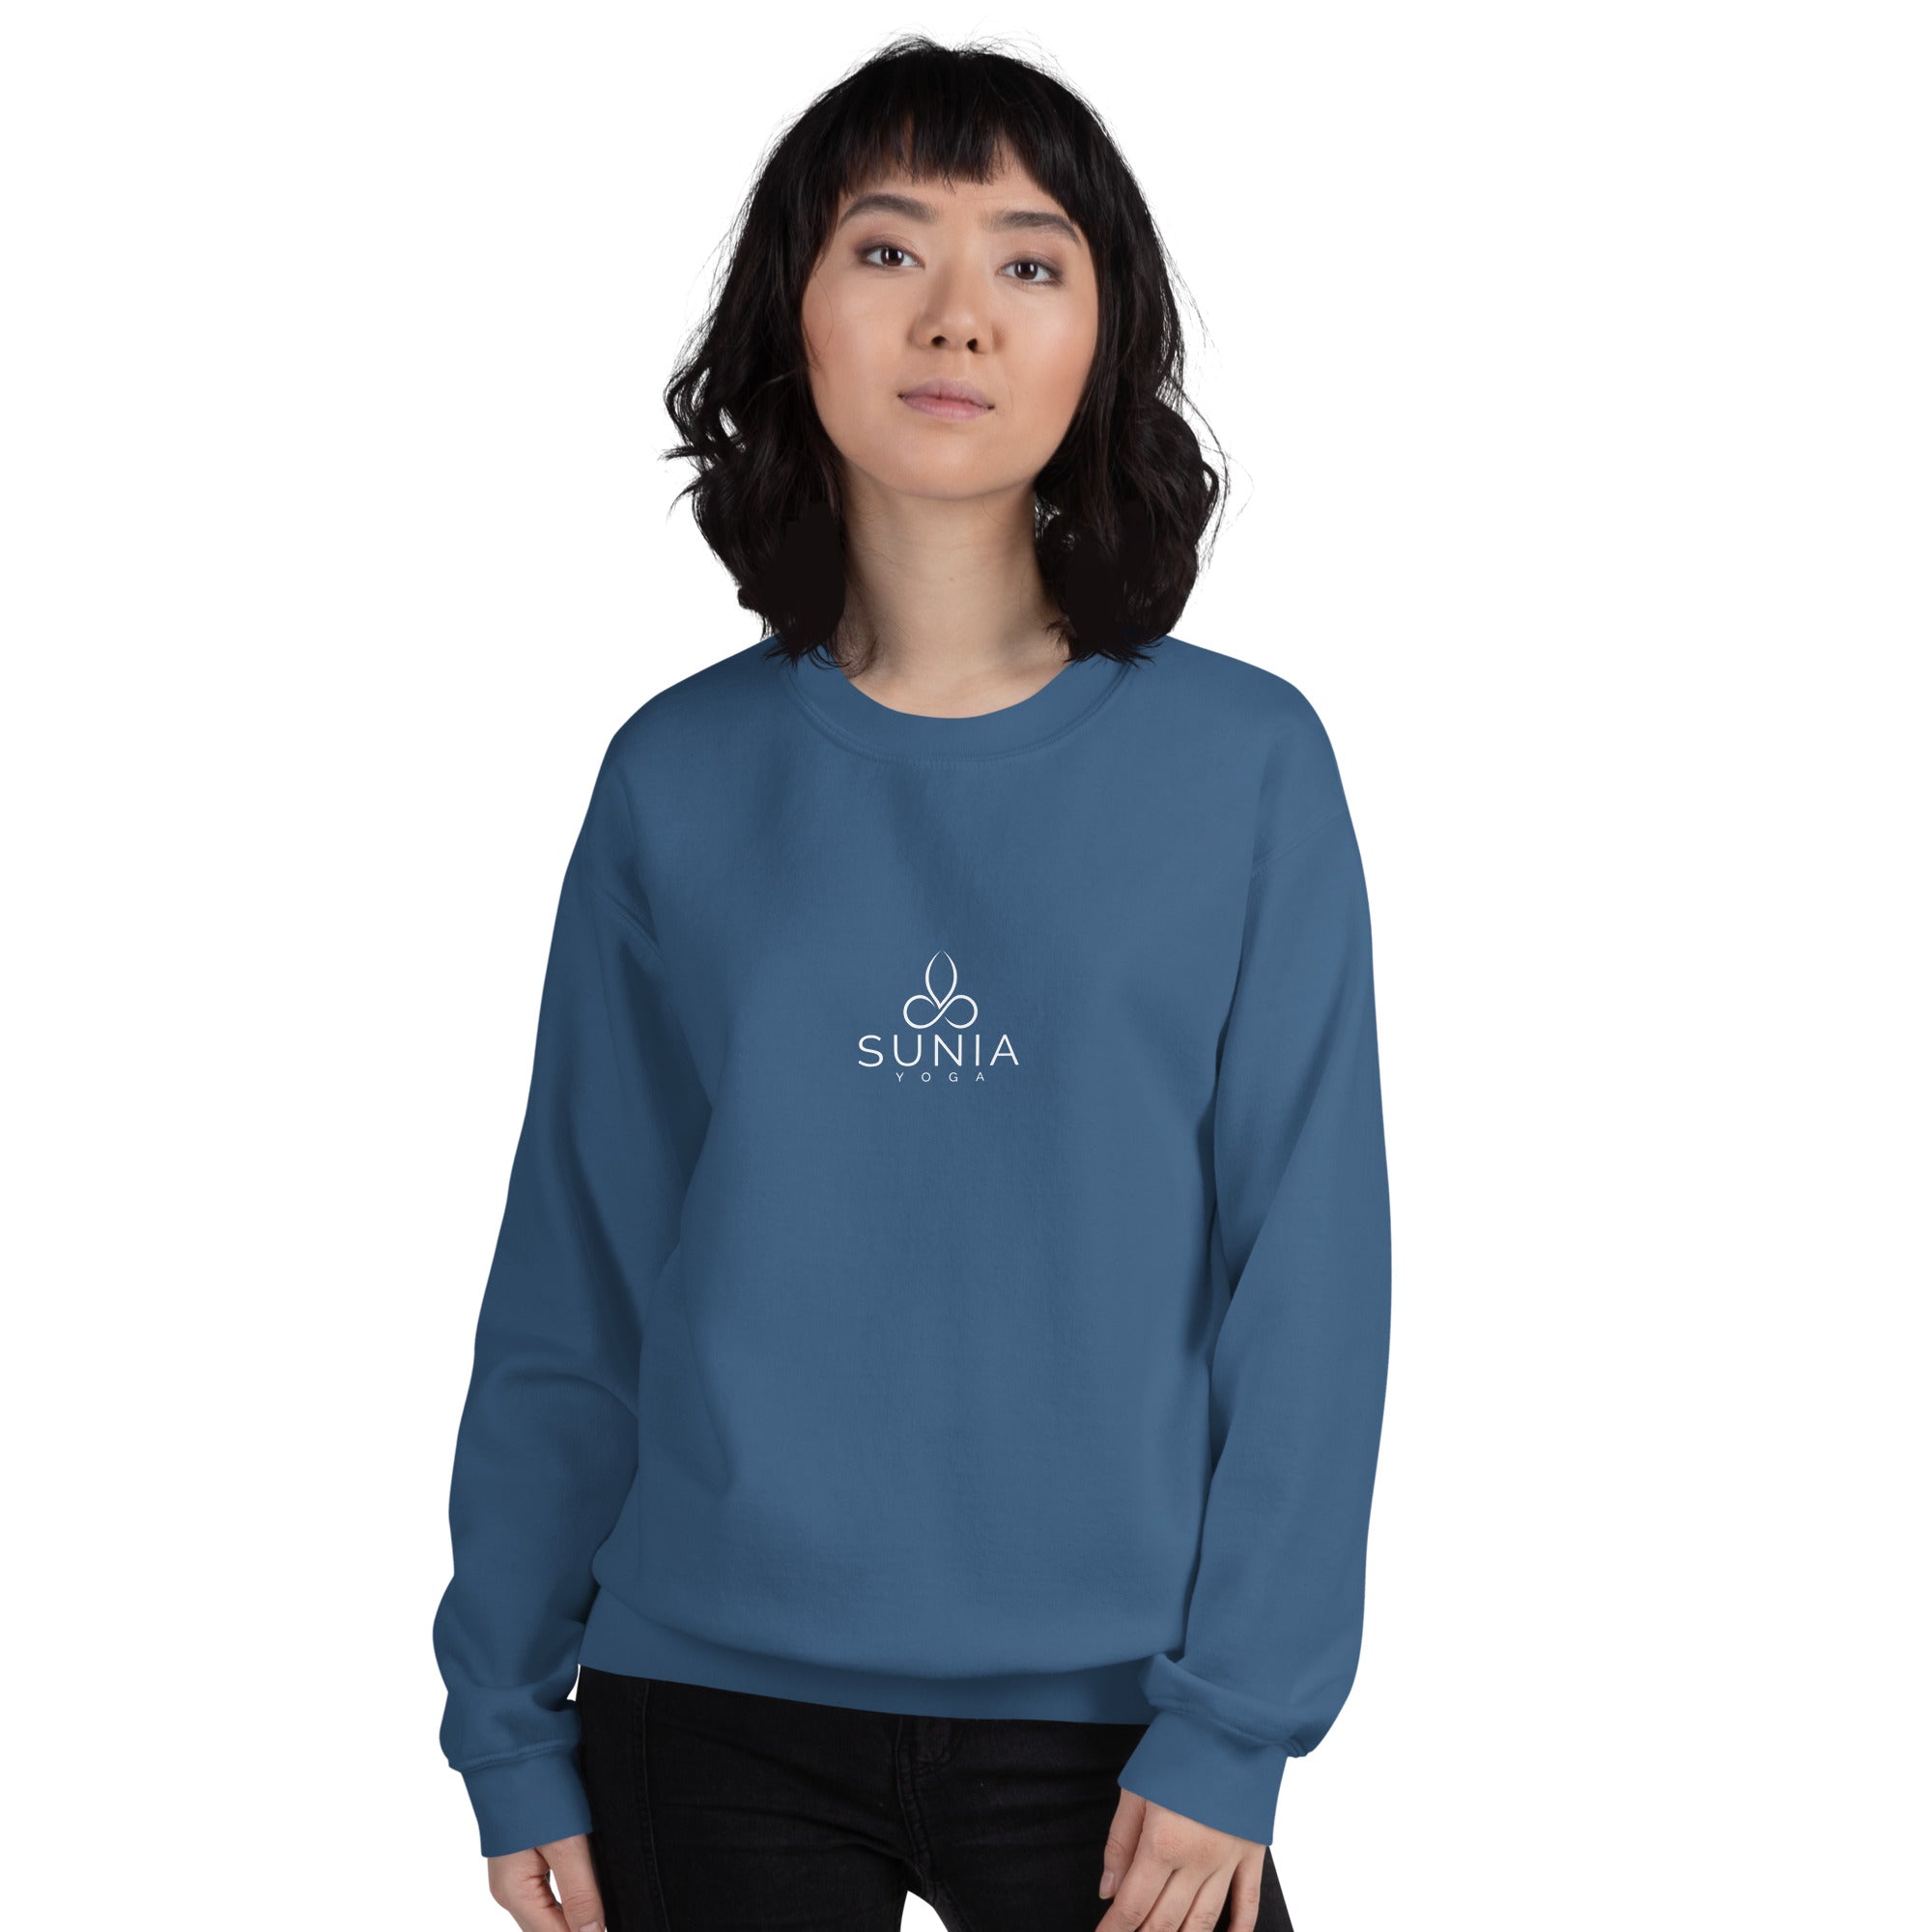 Sunia Yoga1 Sweatshirt